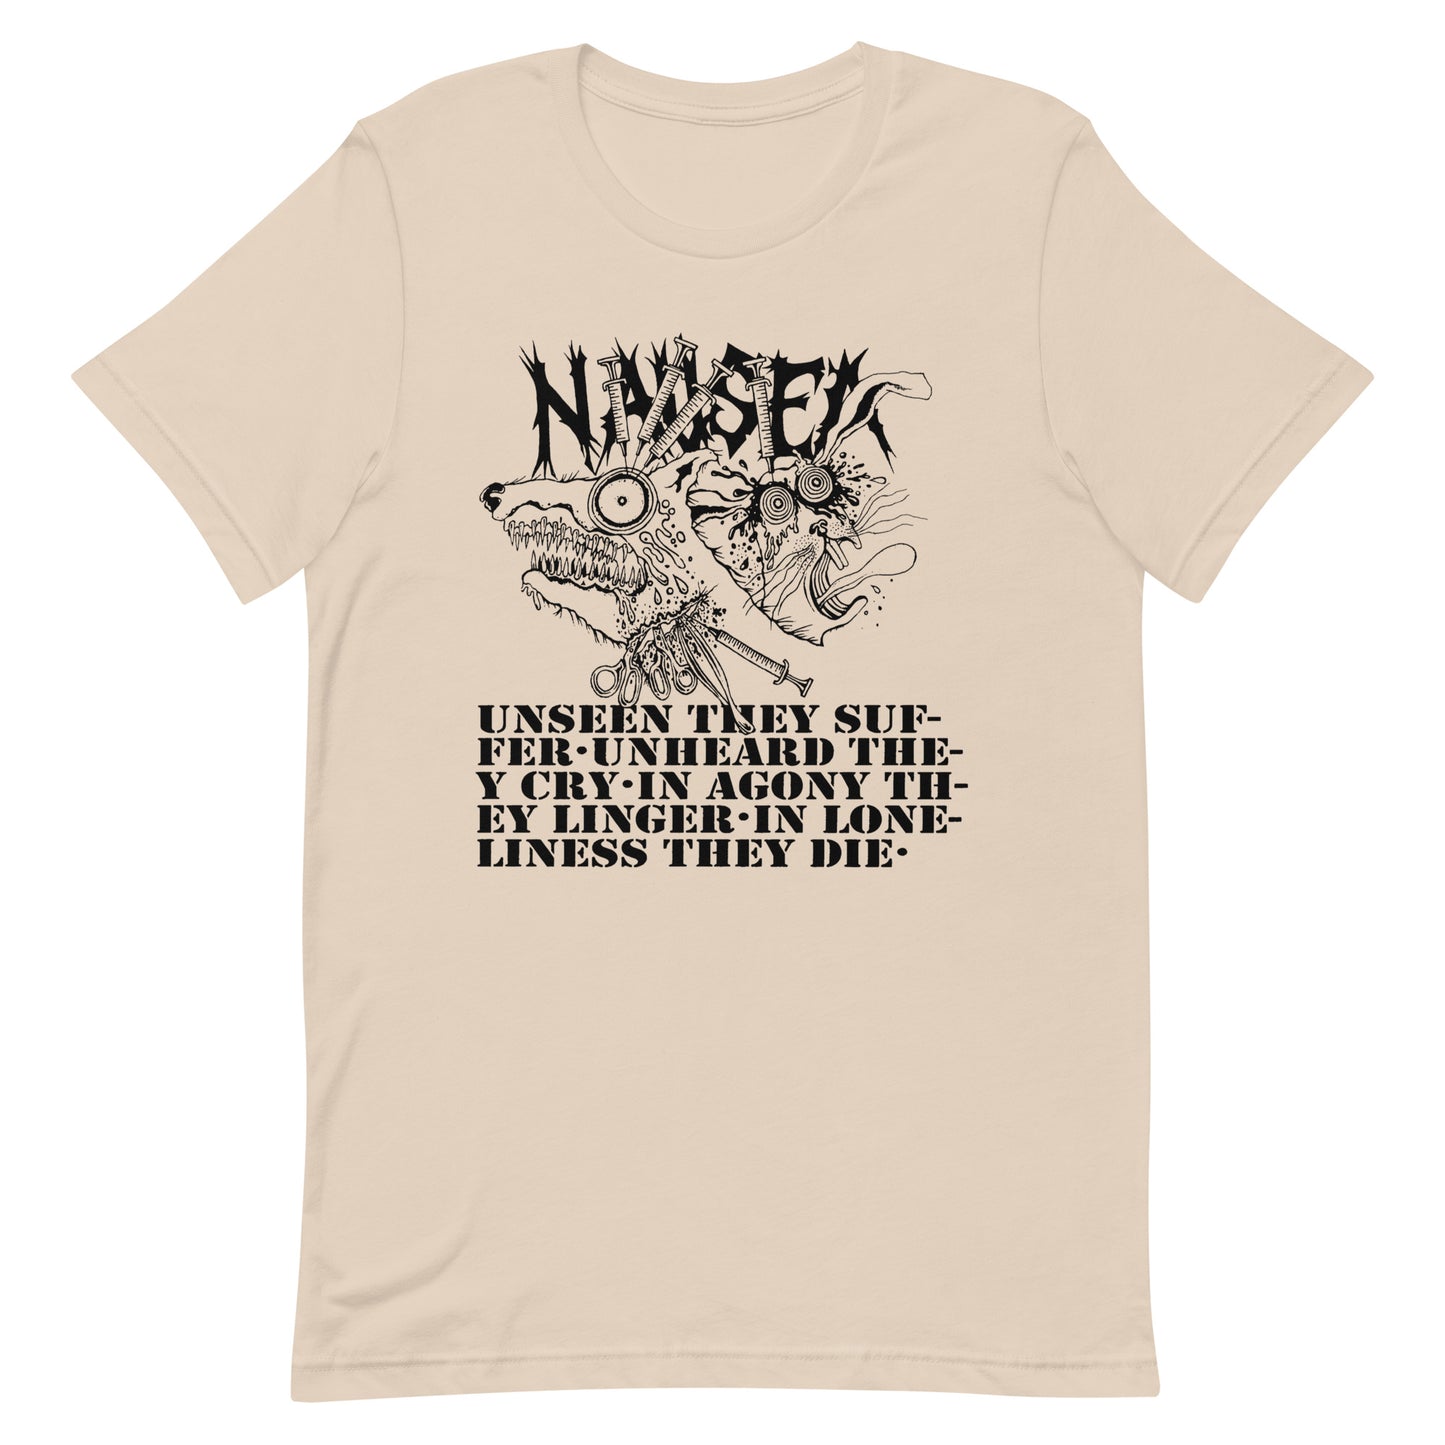 Nausea - Unseen They Suffer T-Shirt